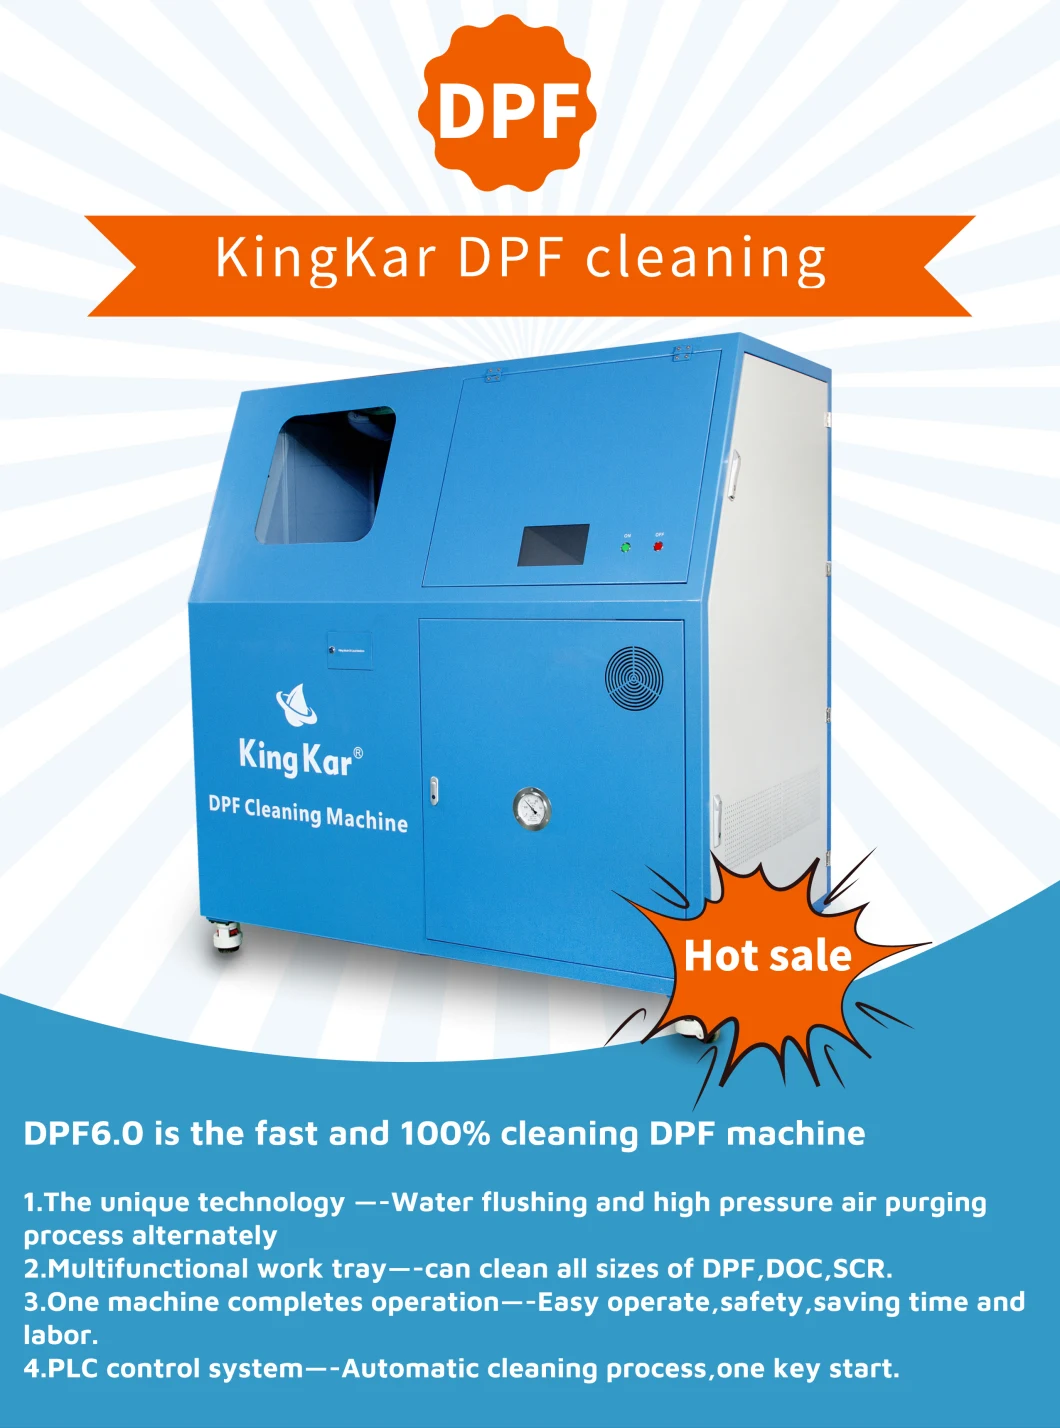 DPF Cleaning Machine Diesel Particulate Filter DPF Cleaning Machine in UK